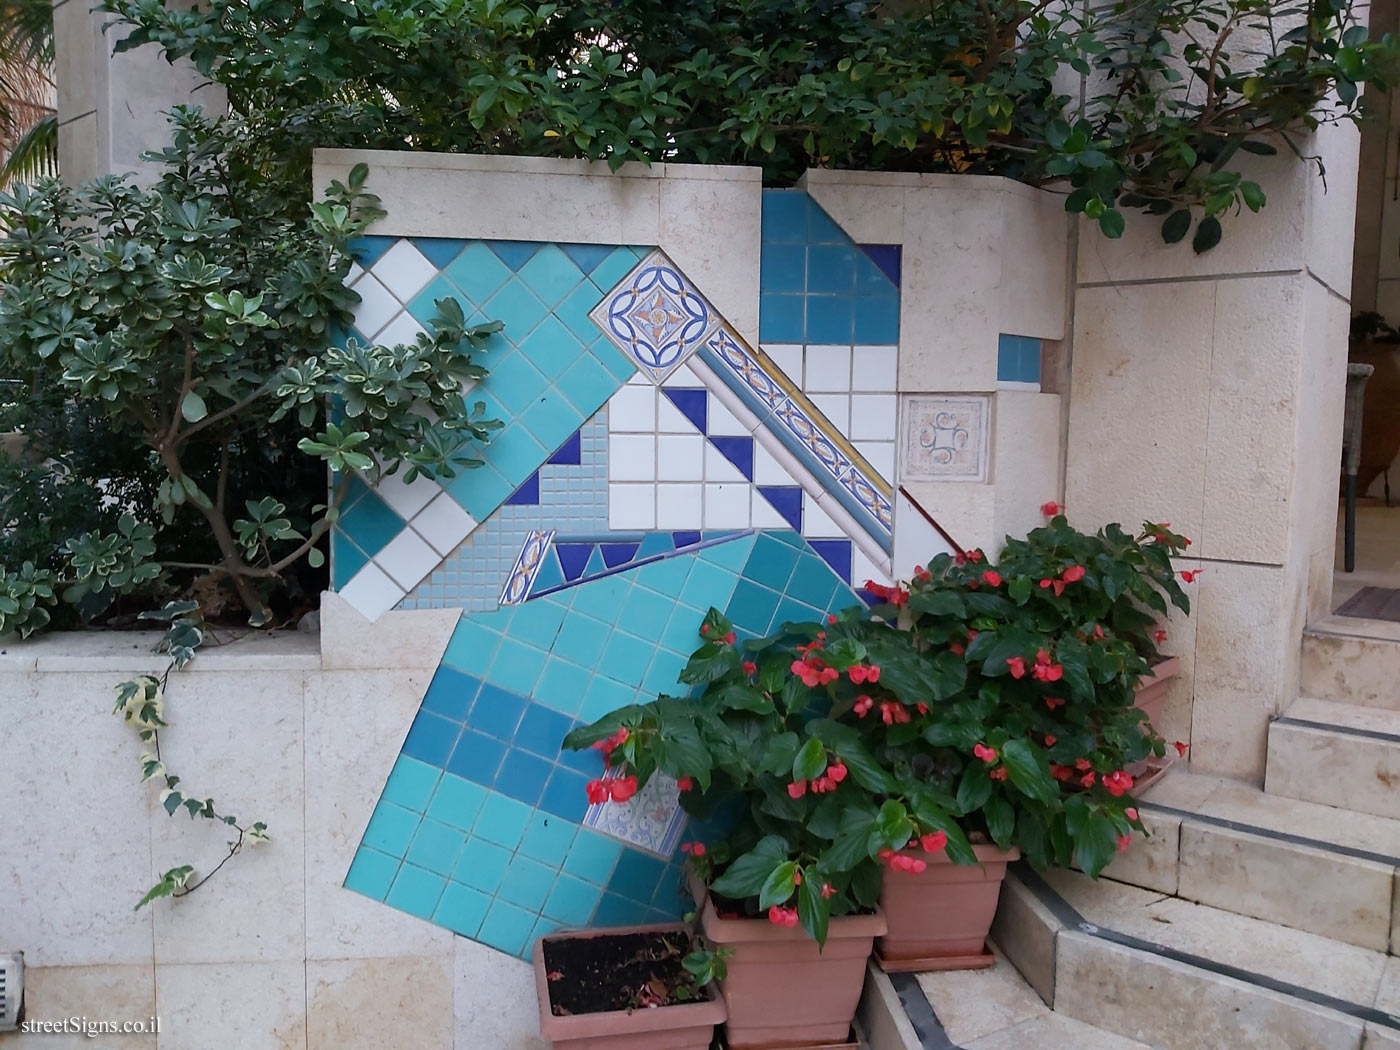 Tel Aviv - "The fountain" - Outdoor sculpture by Esther Perkel - Shir St 2, Tel Aviv-Yafo, Israel